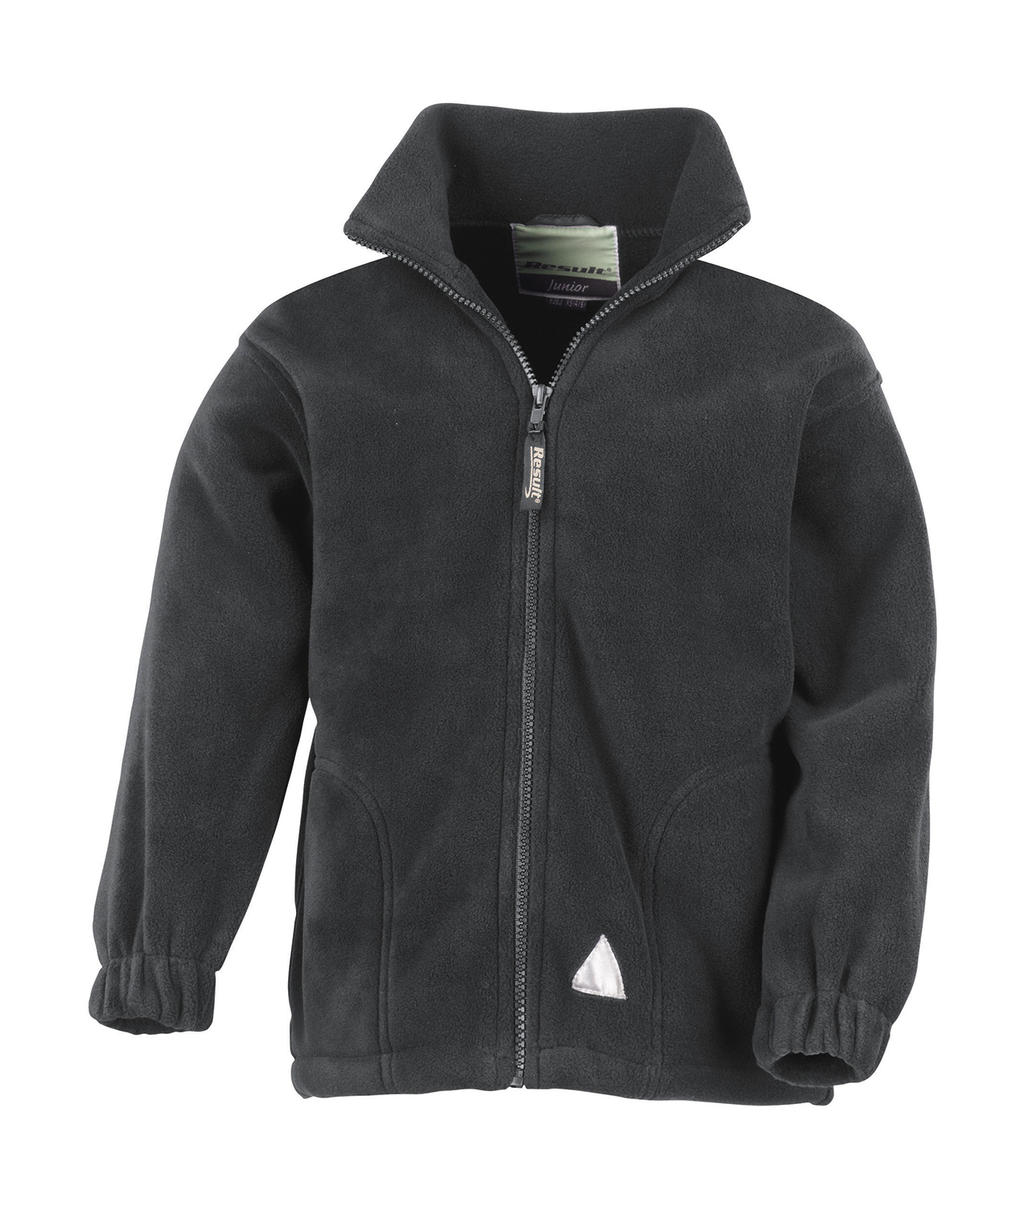 Detská fleecová bunda so zipsom - oxford grey